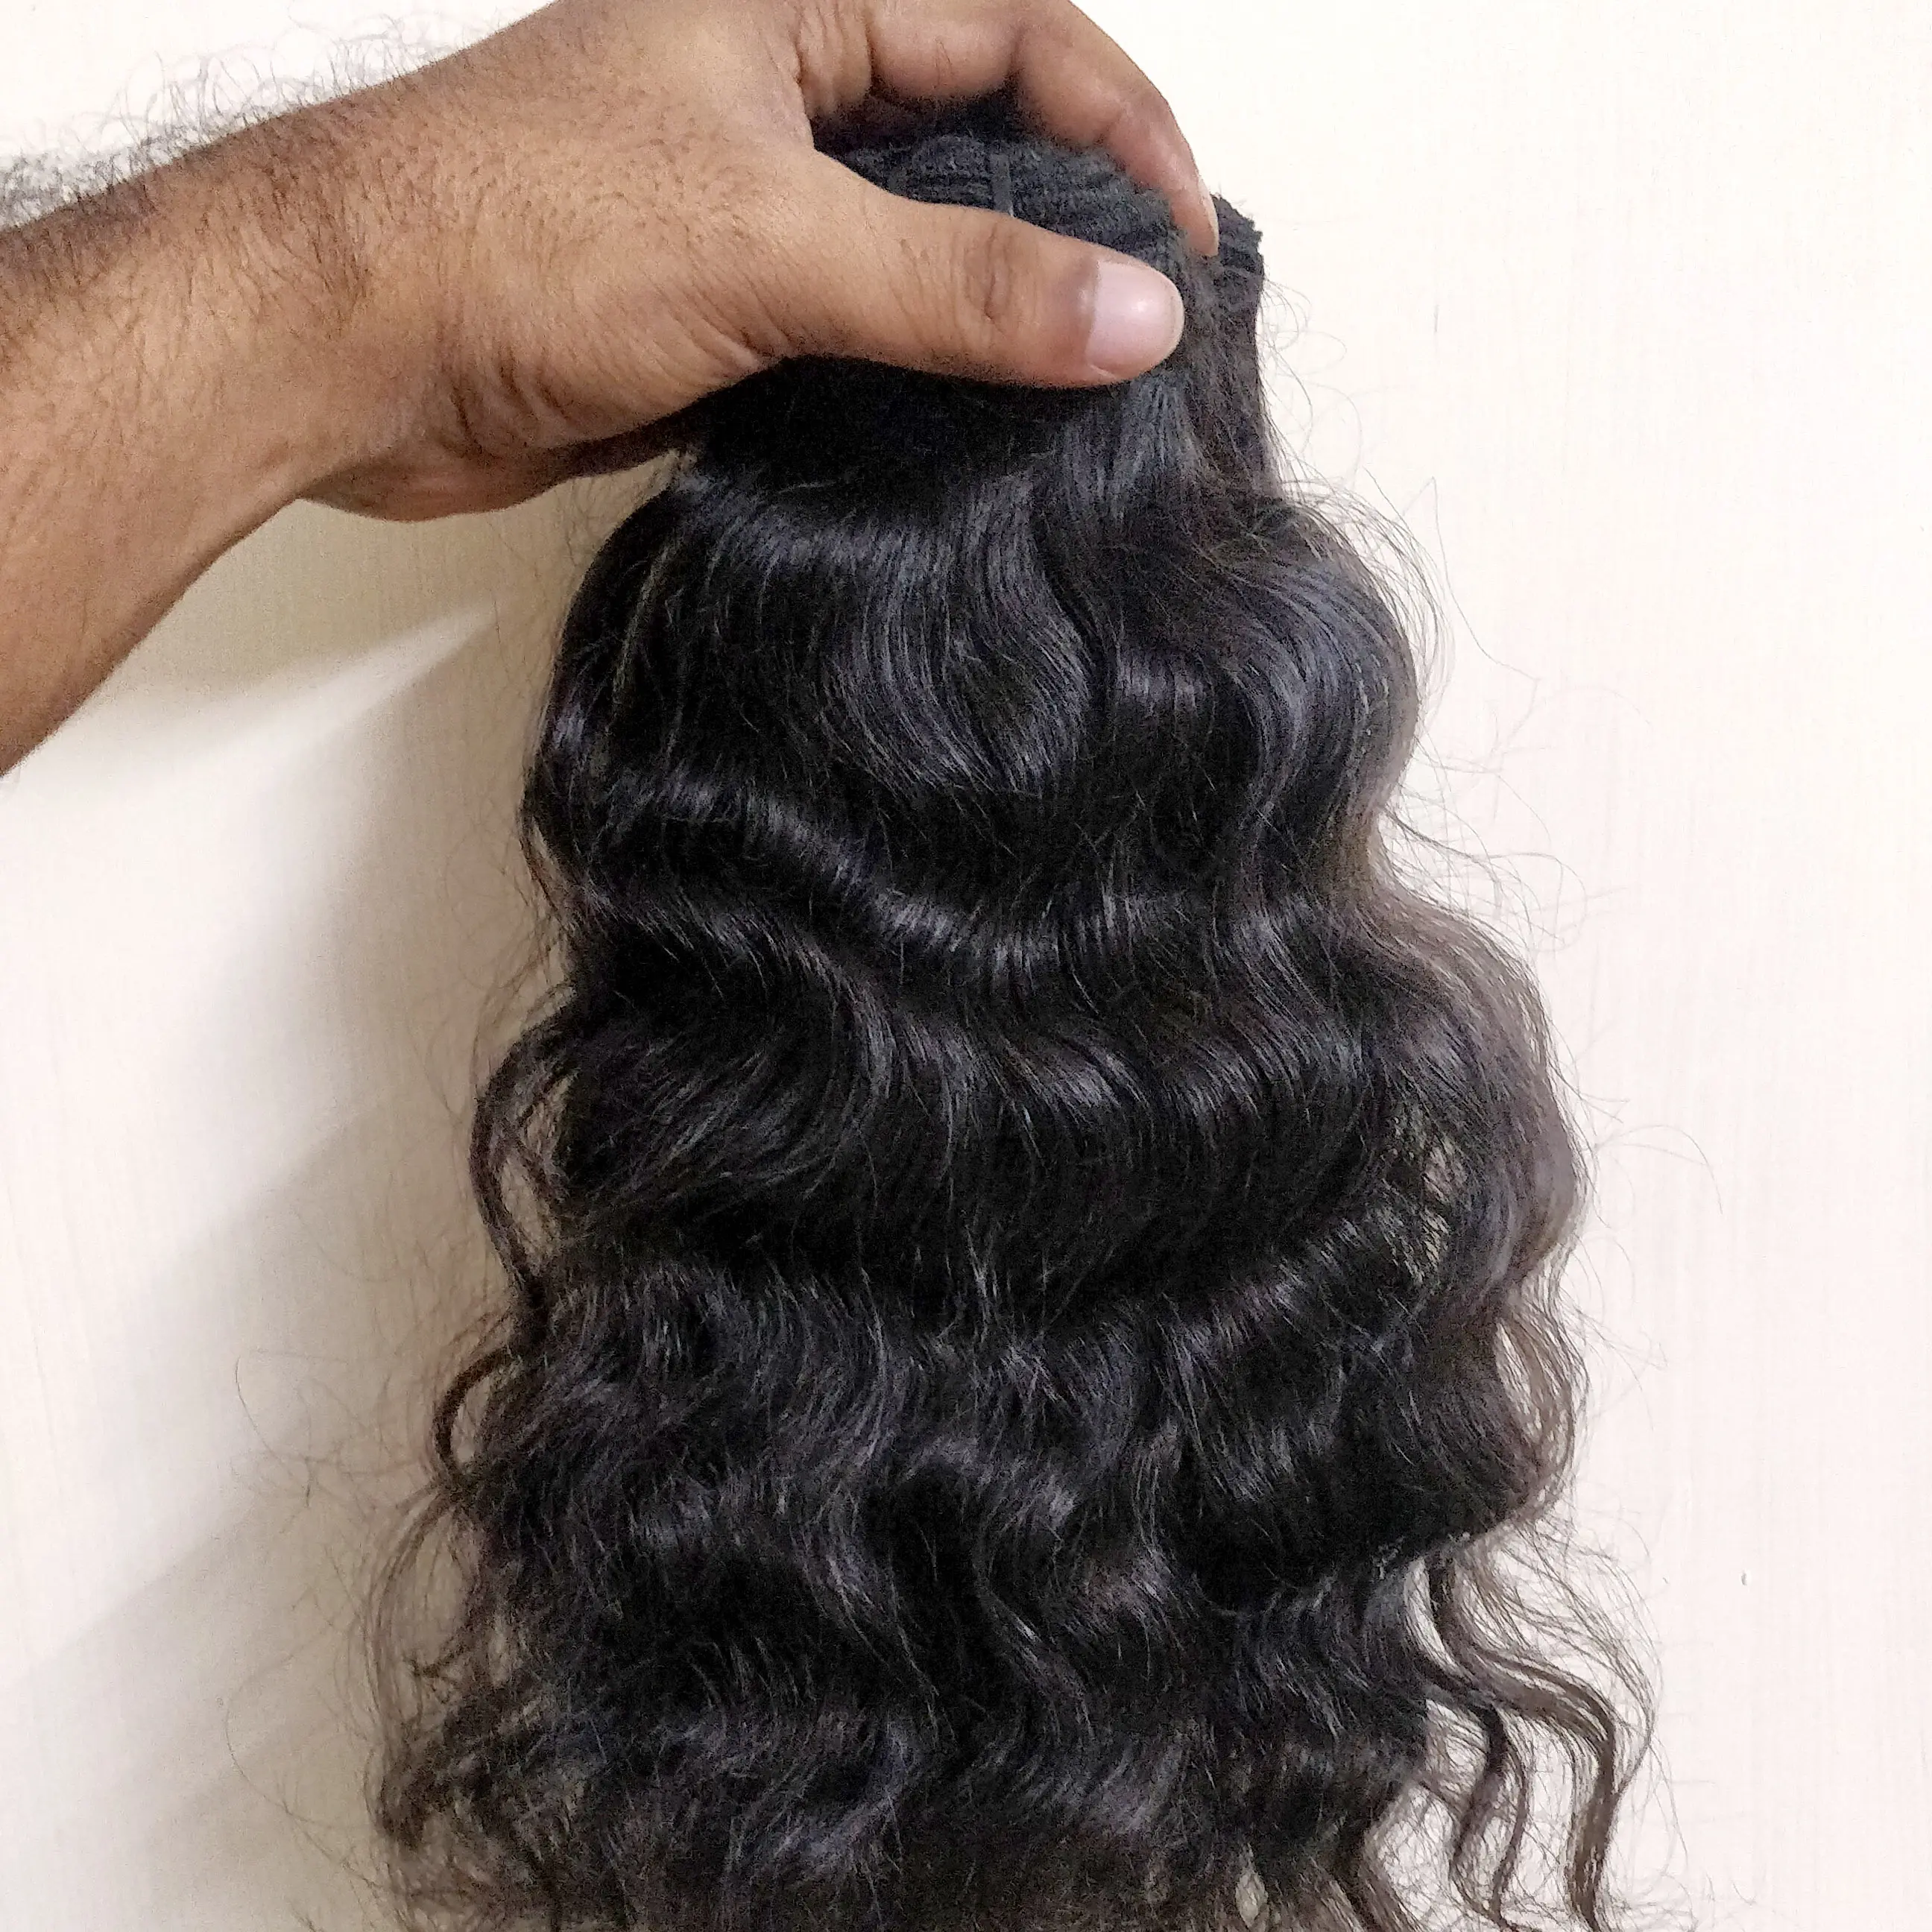 Arapsaçı ücretsiz cles cles bozulmamış hizalanmış bakire remy insan saç uzatma genius atkı